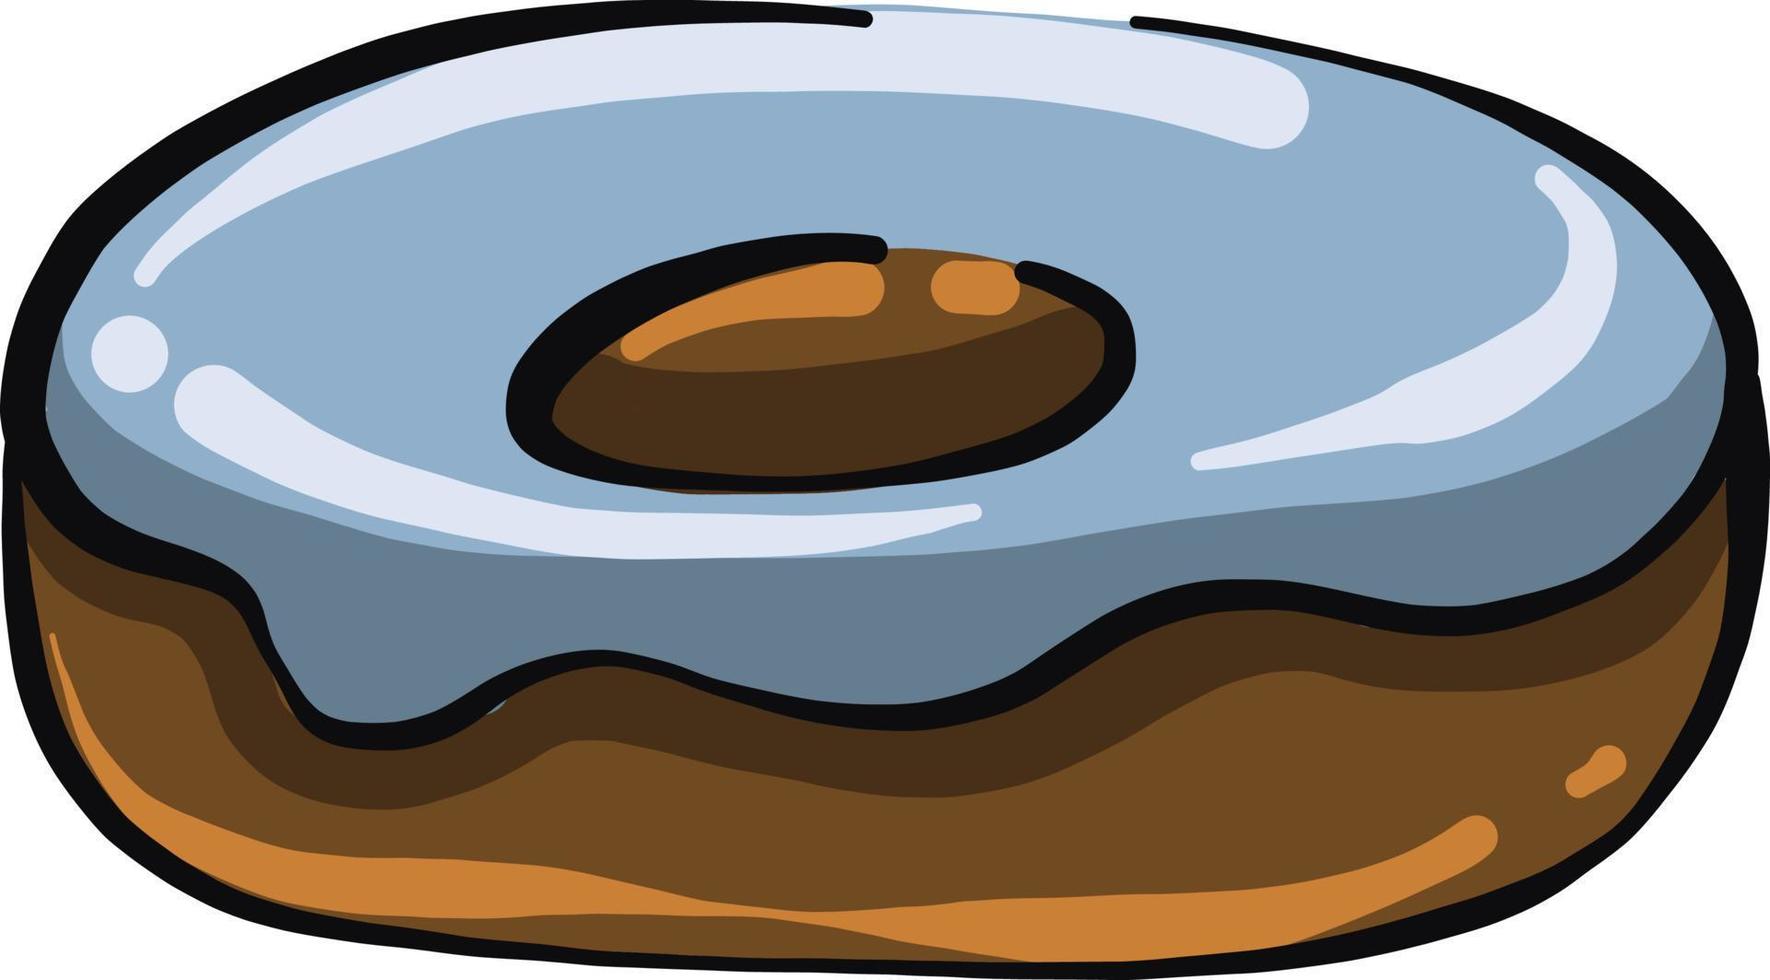 Blue donut, illustration, vector on a white background.